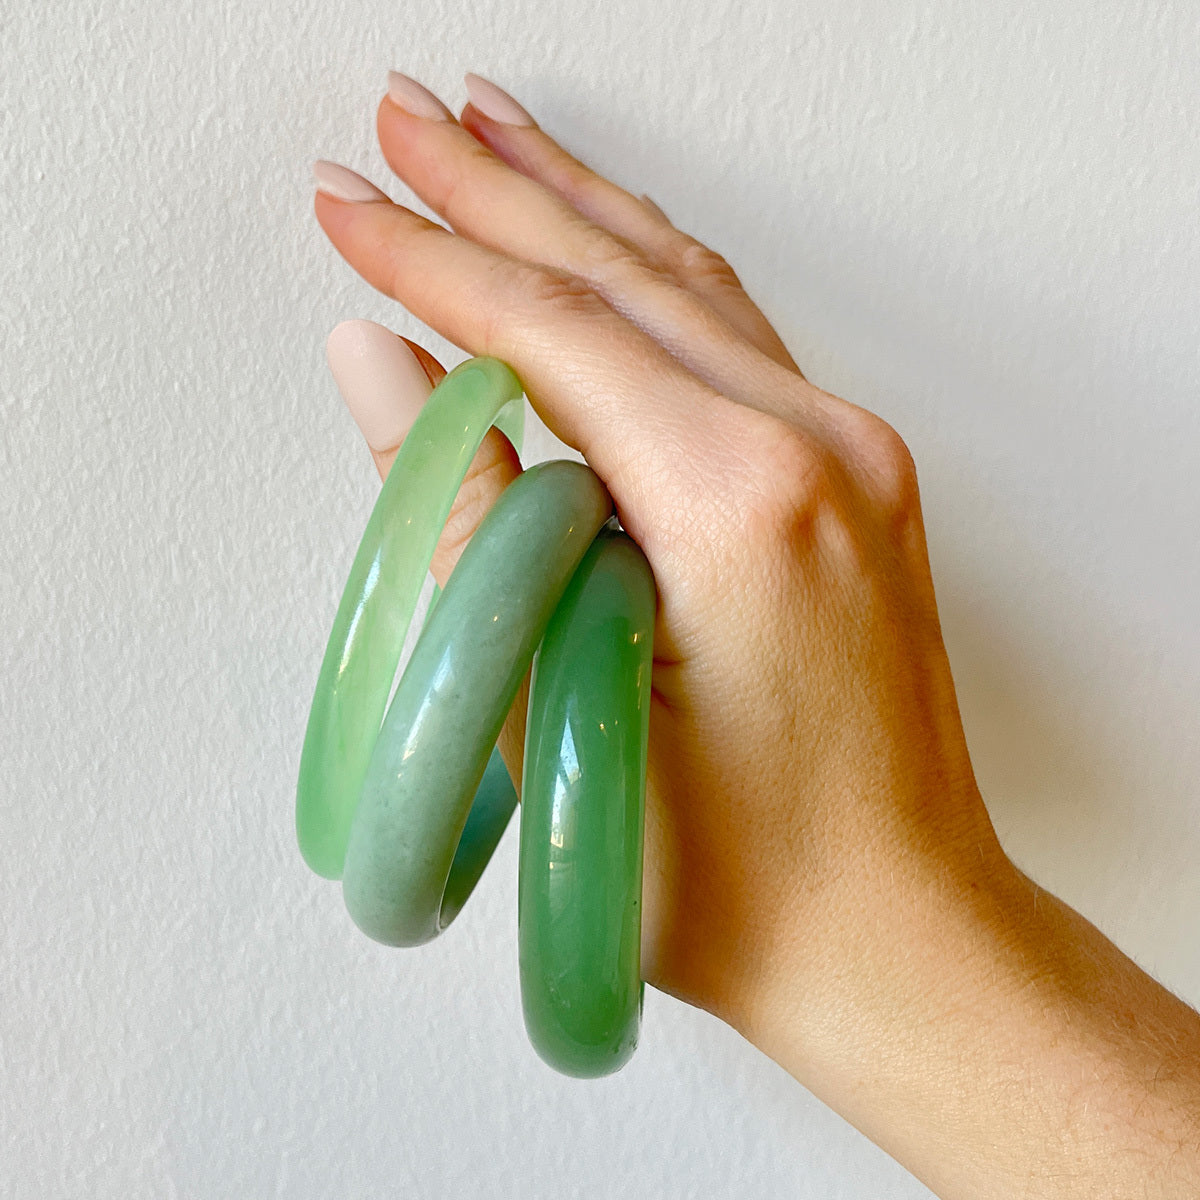 How To Wear a Jade Bangle